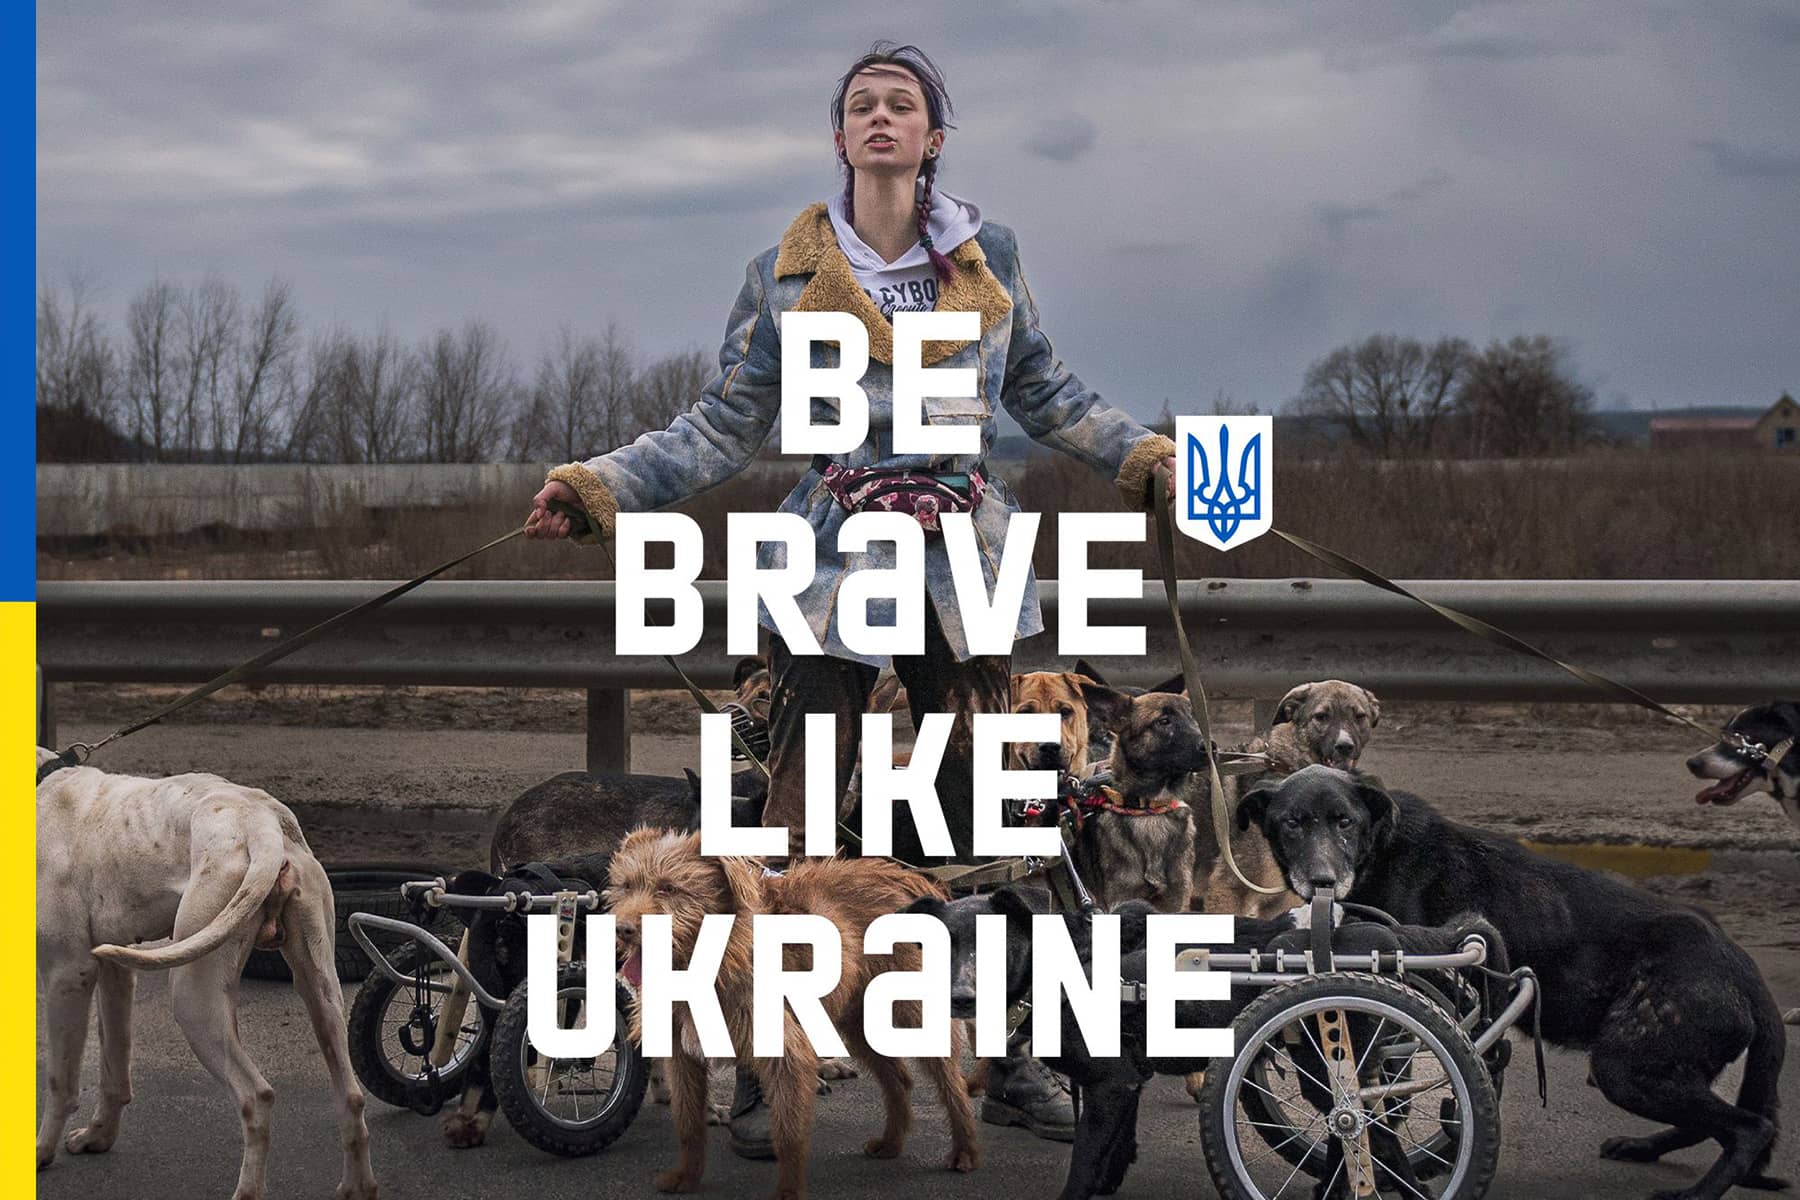 081922_UkraineBravery_02